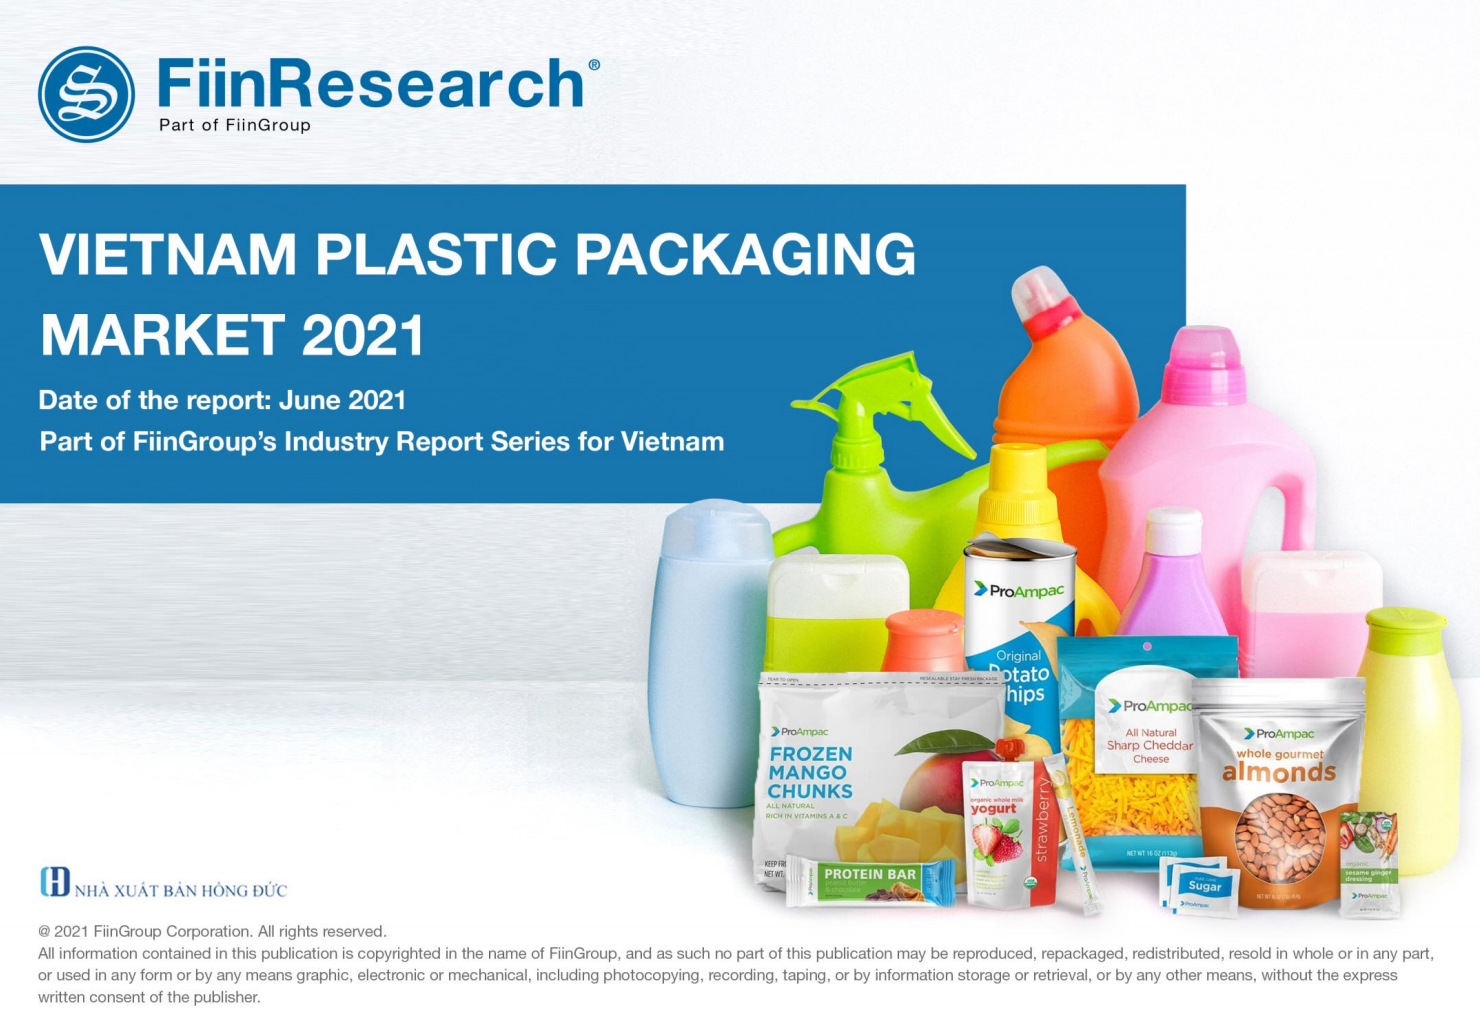 Vietnam Plastic Packaging Market 2021